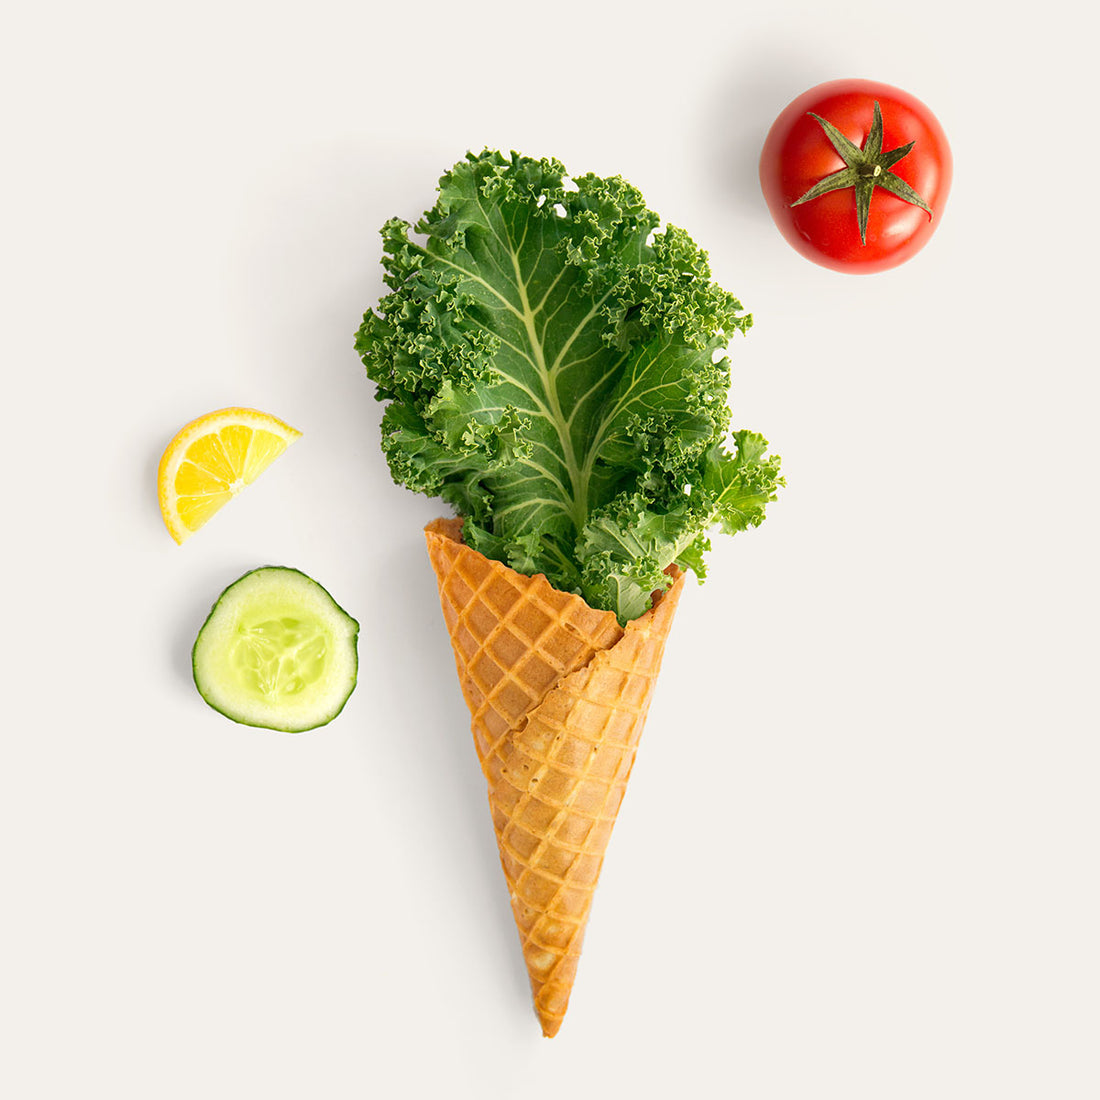 kale ice cream cone eat healthy vegan gluten free dessert order online for delivery